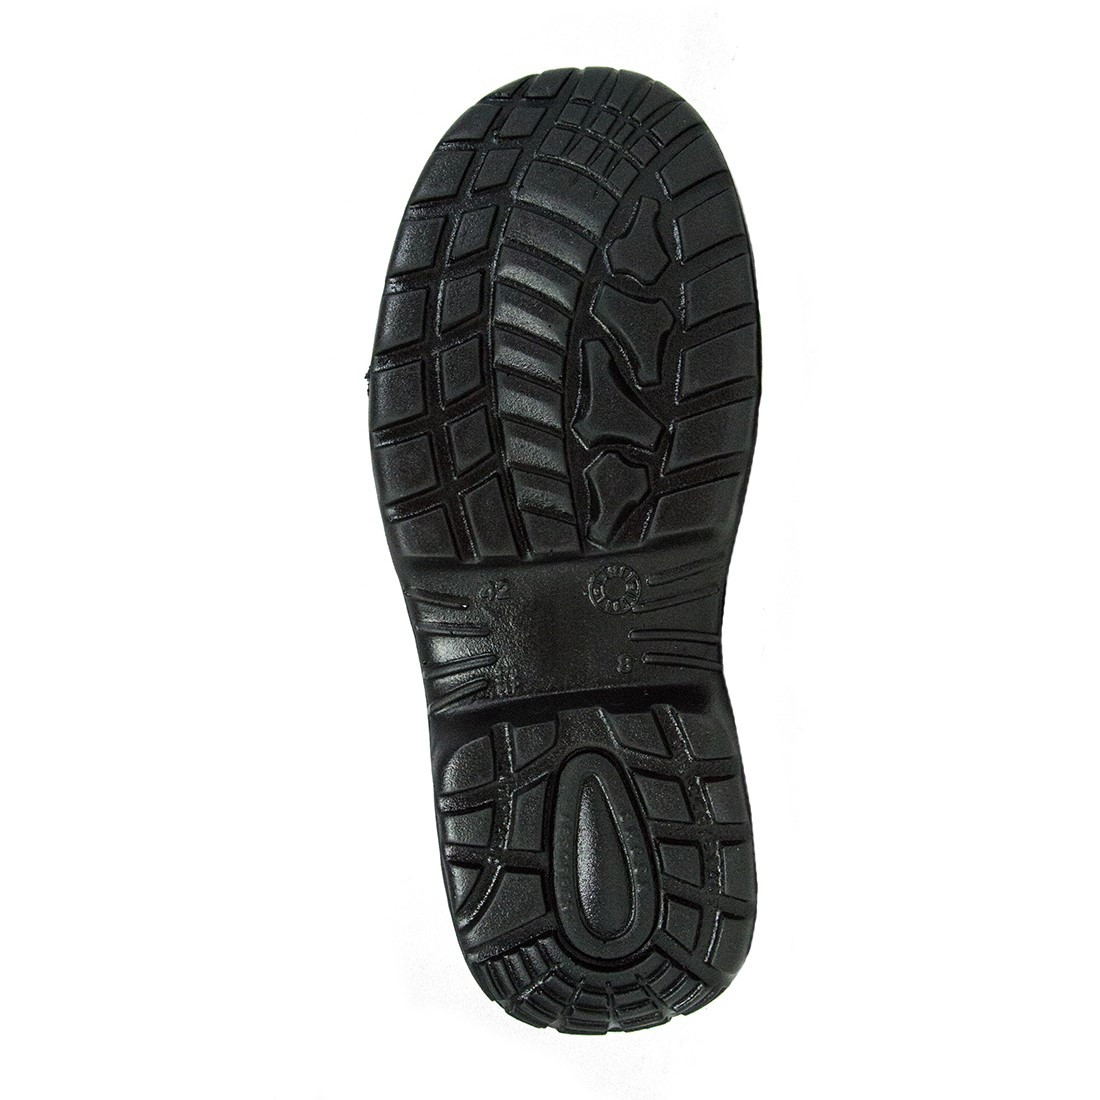 Etoile Shoe S3 SRC - Calzado de protección